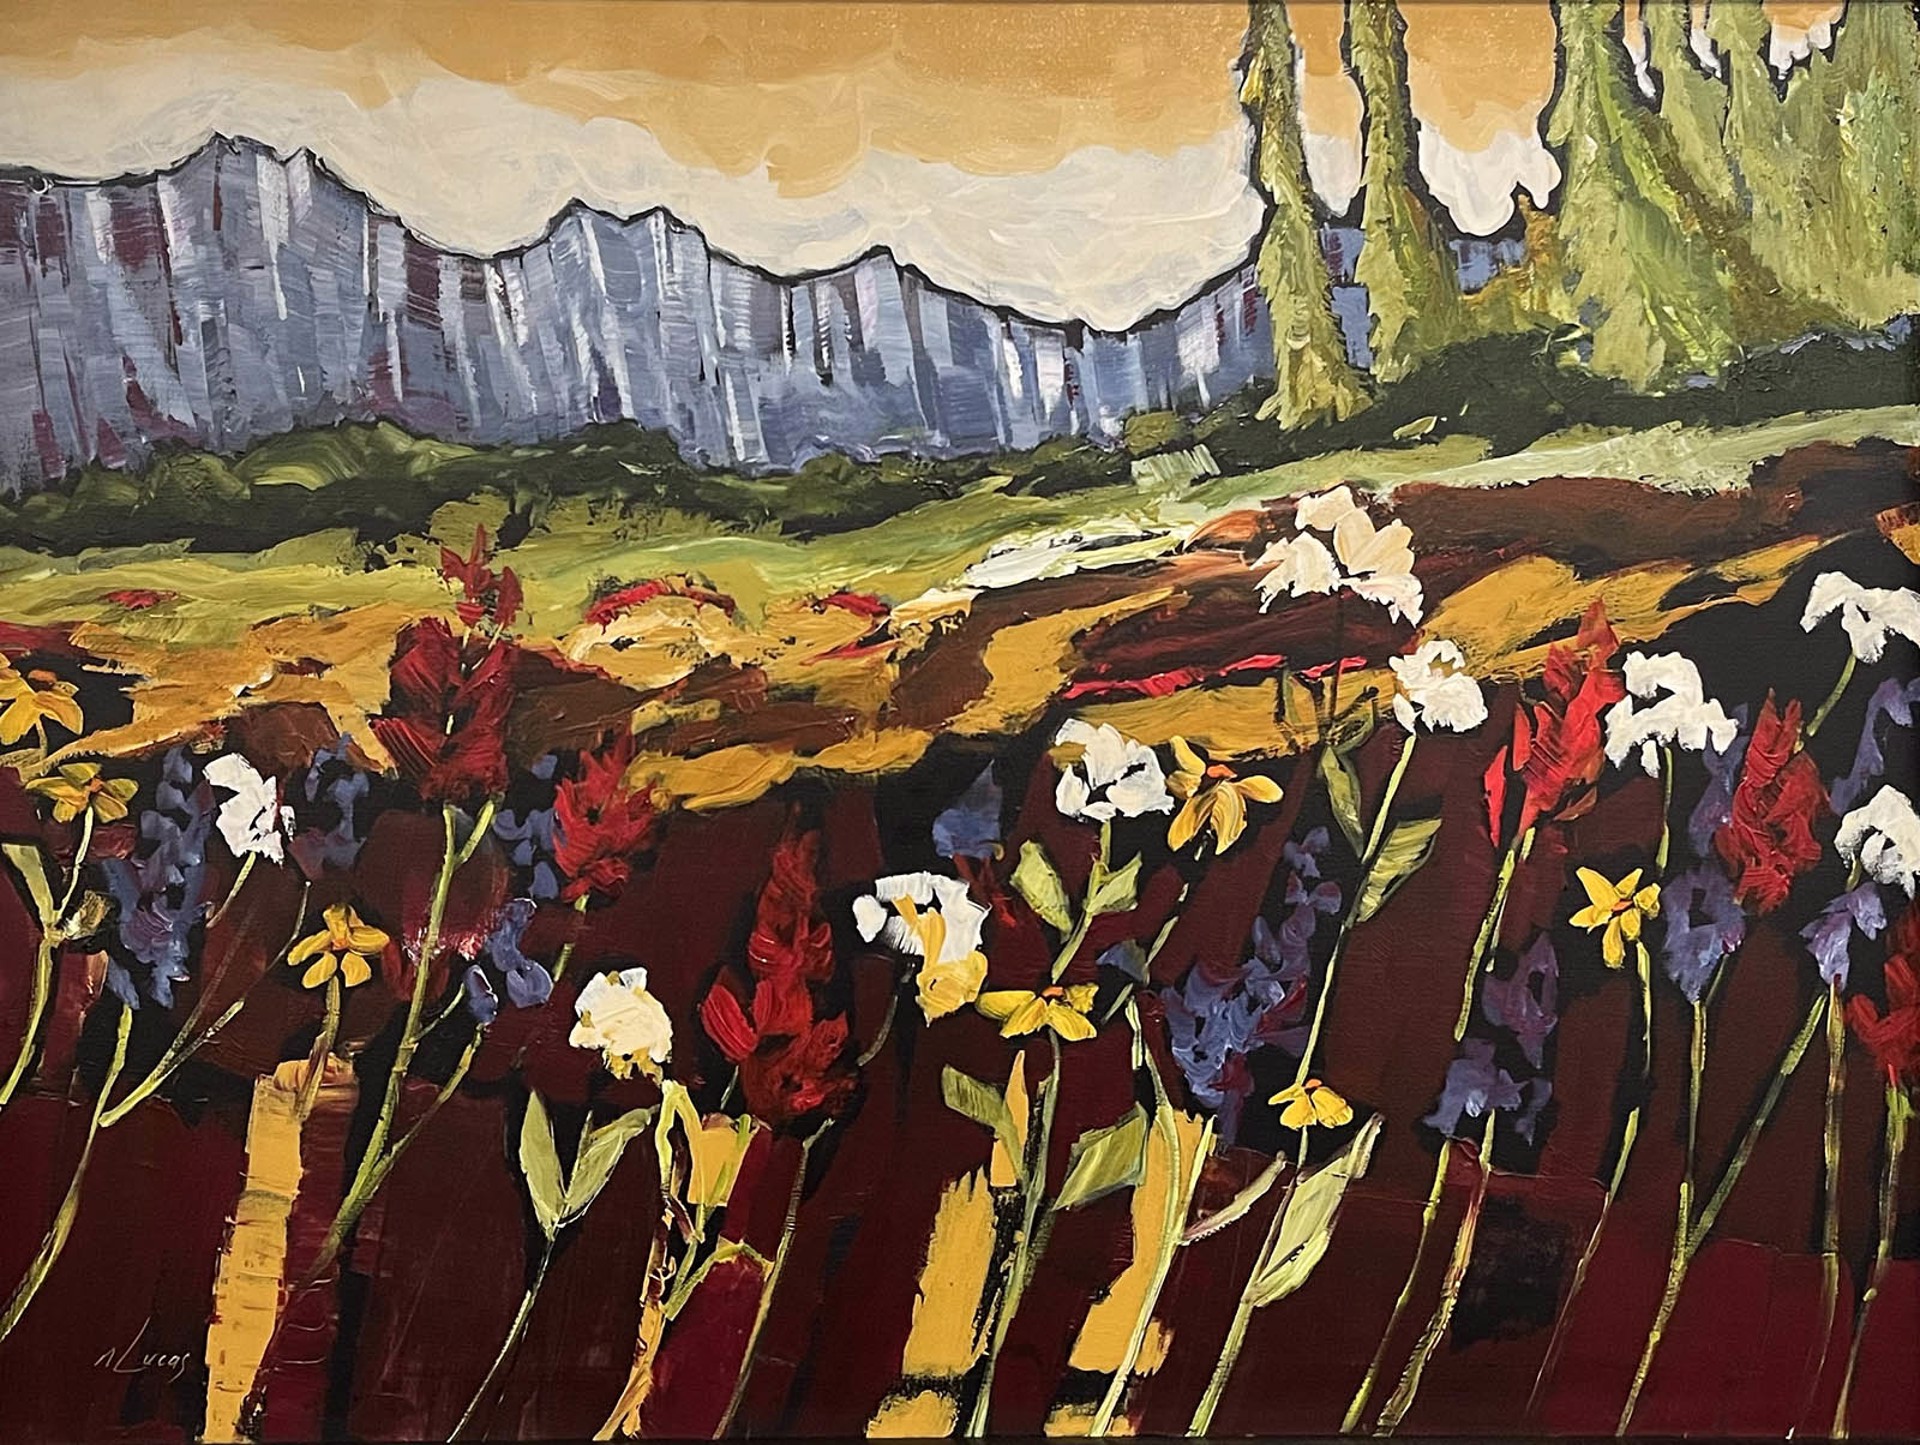 Ridge of Wildflowers by Nancy Lucas